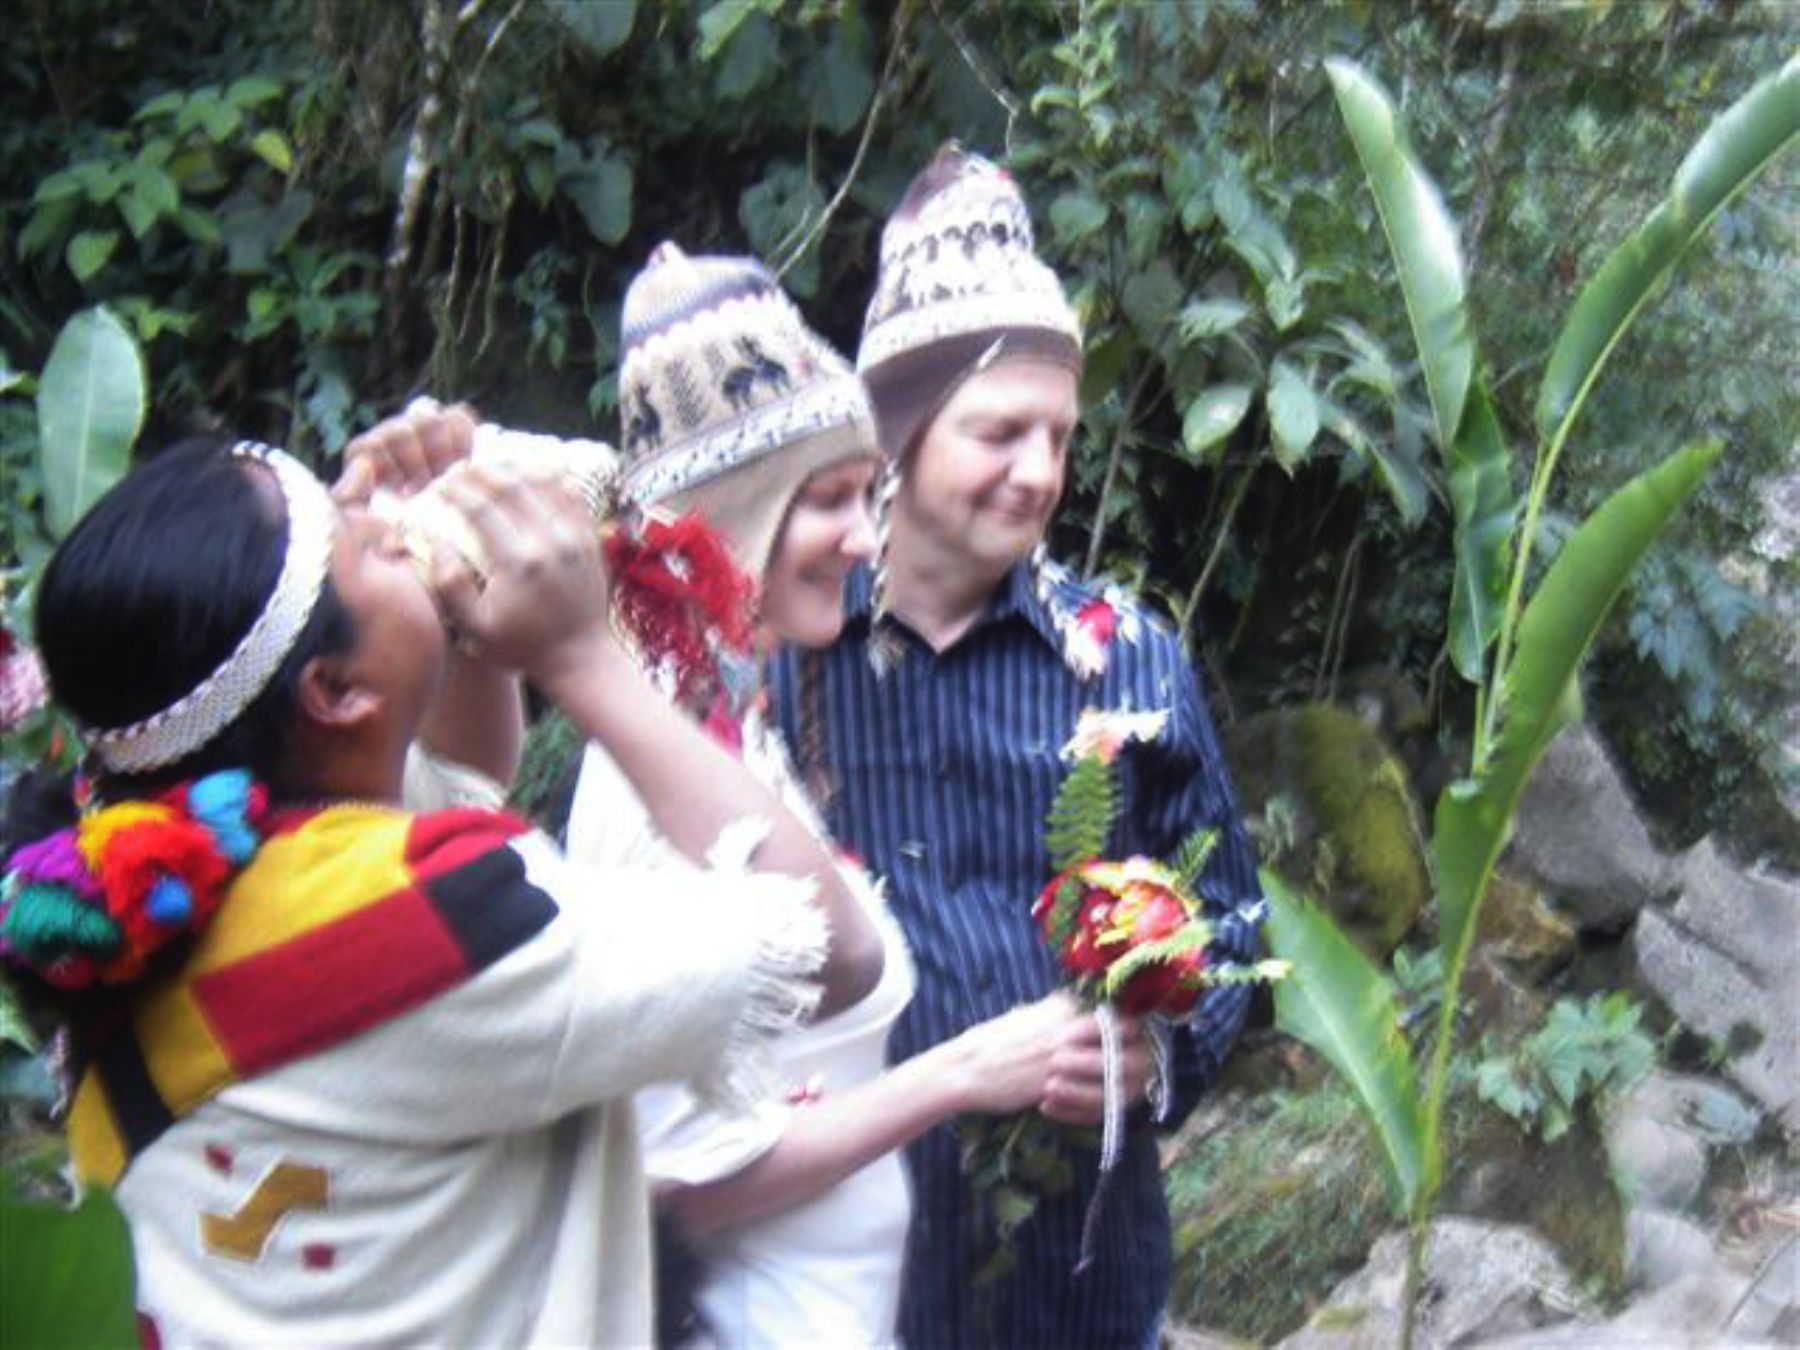 Matrimonios al estilo incaico en Machu Picchu. Foto: Difusión.